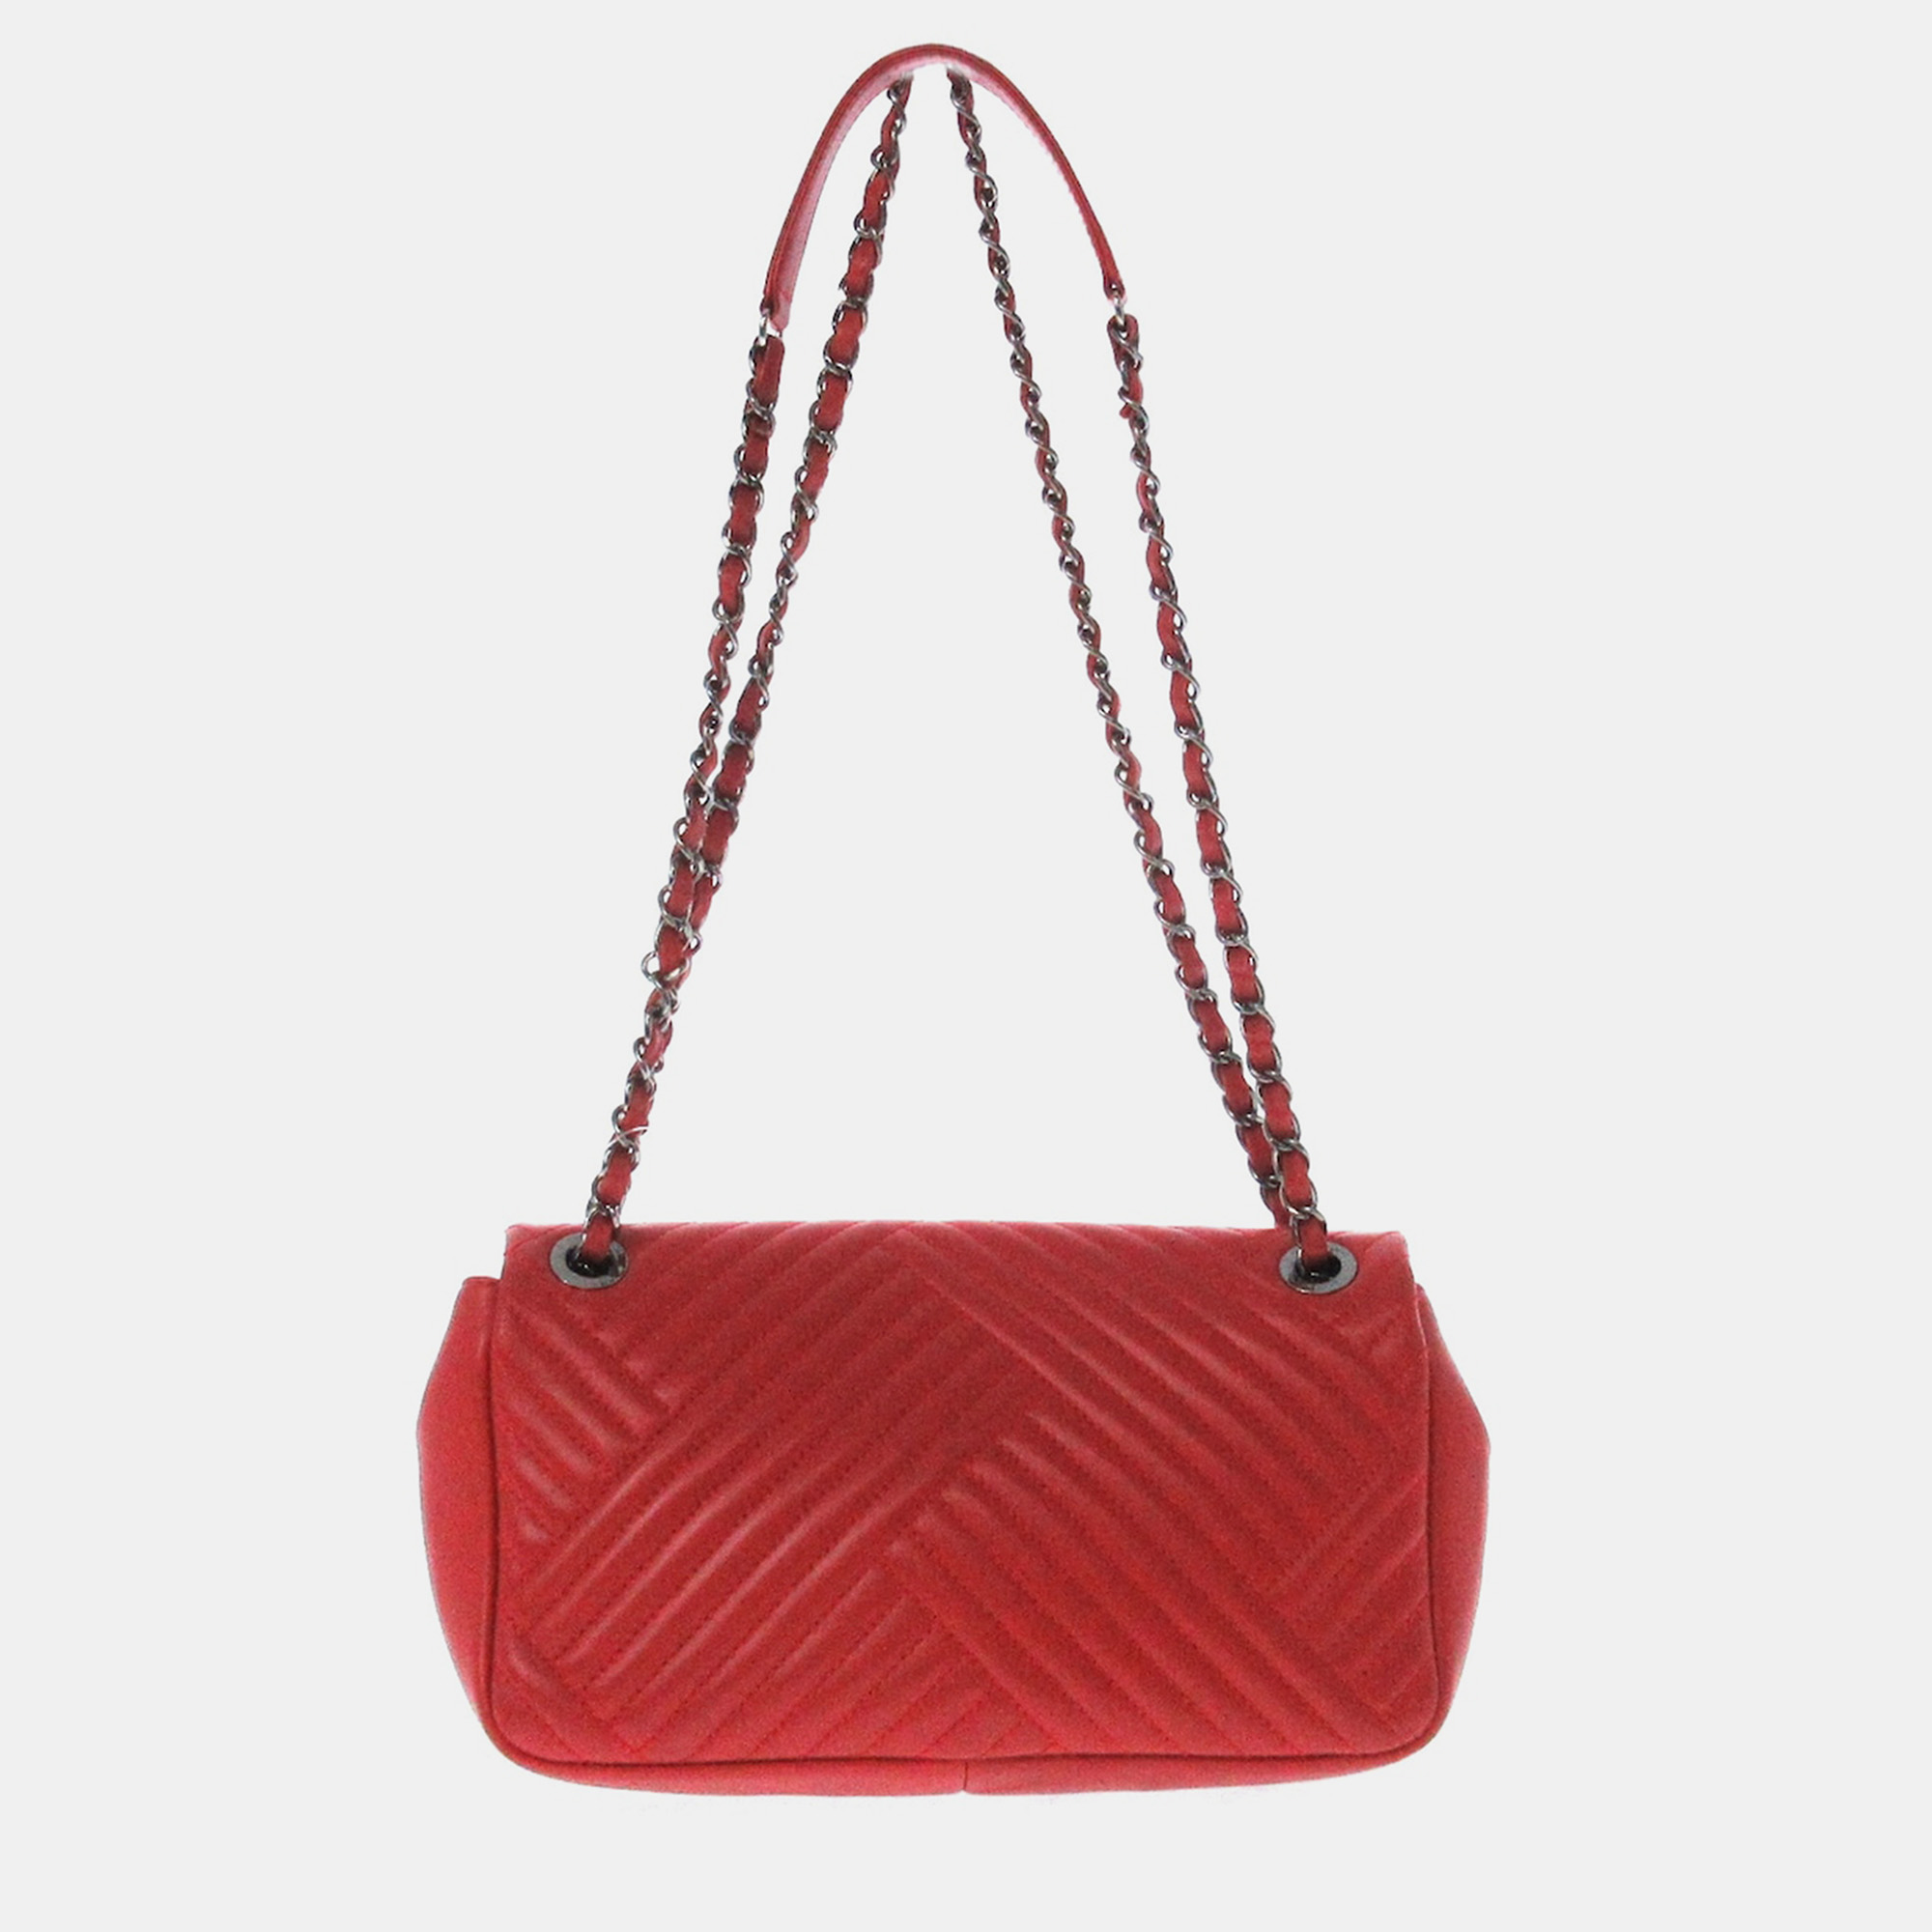 Chanel Red Leather Chevron Shoulder Bag